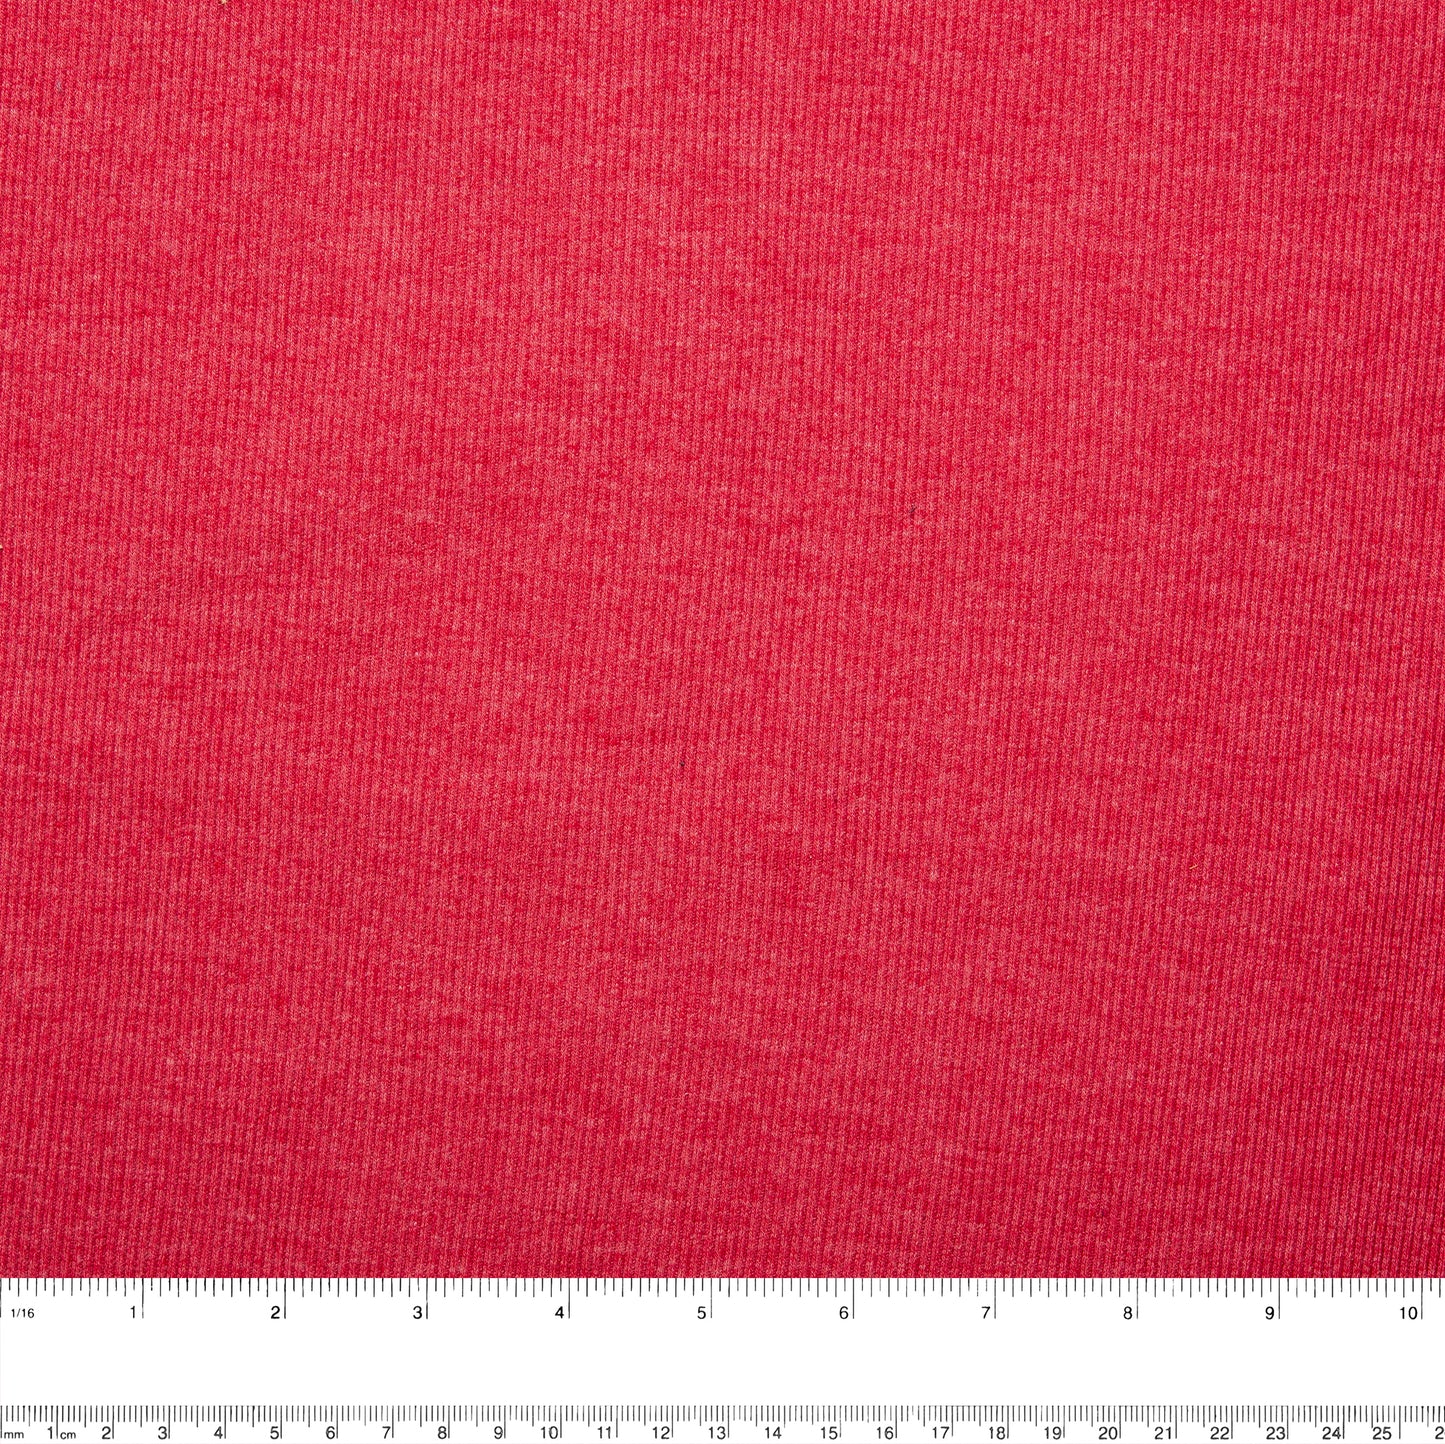 Tubular ribbed knit - Canadian - Red